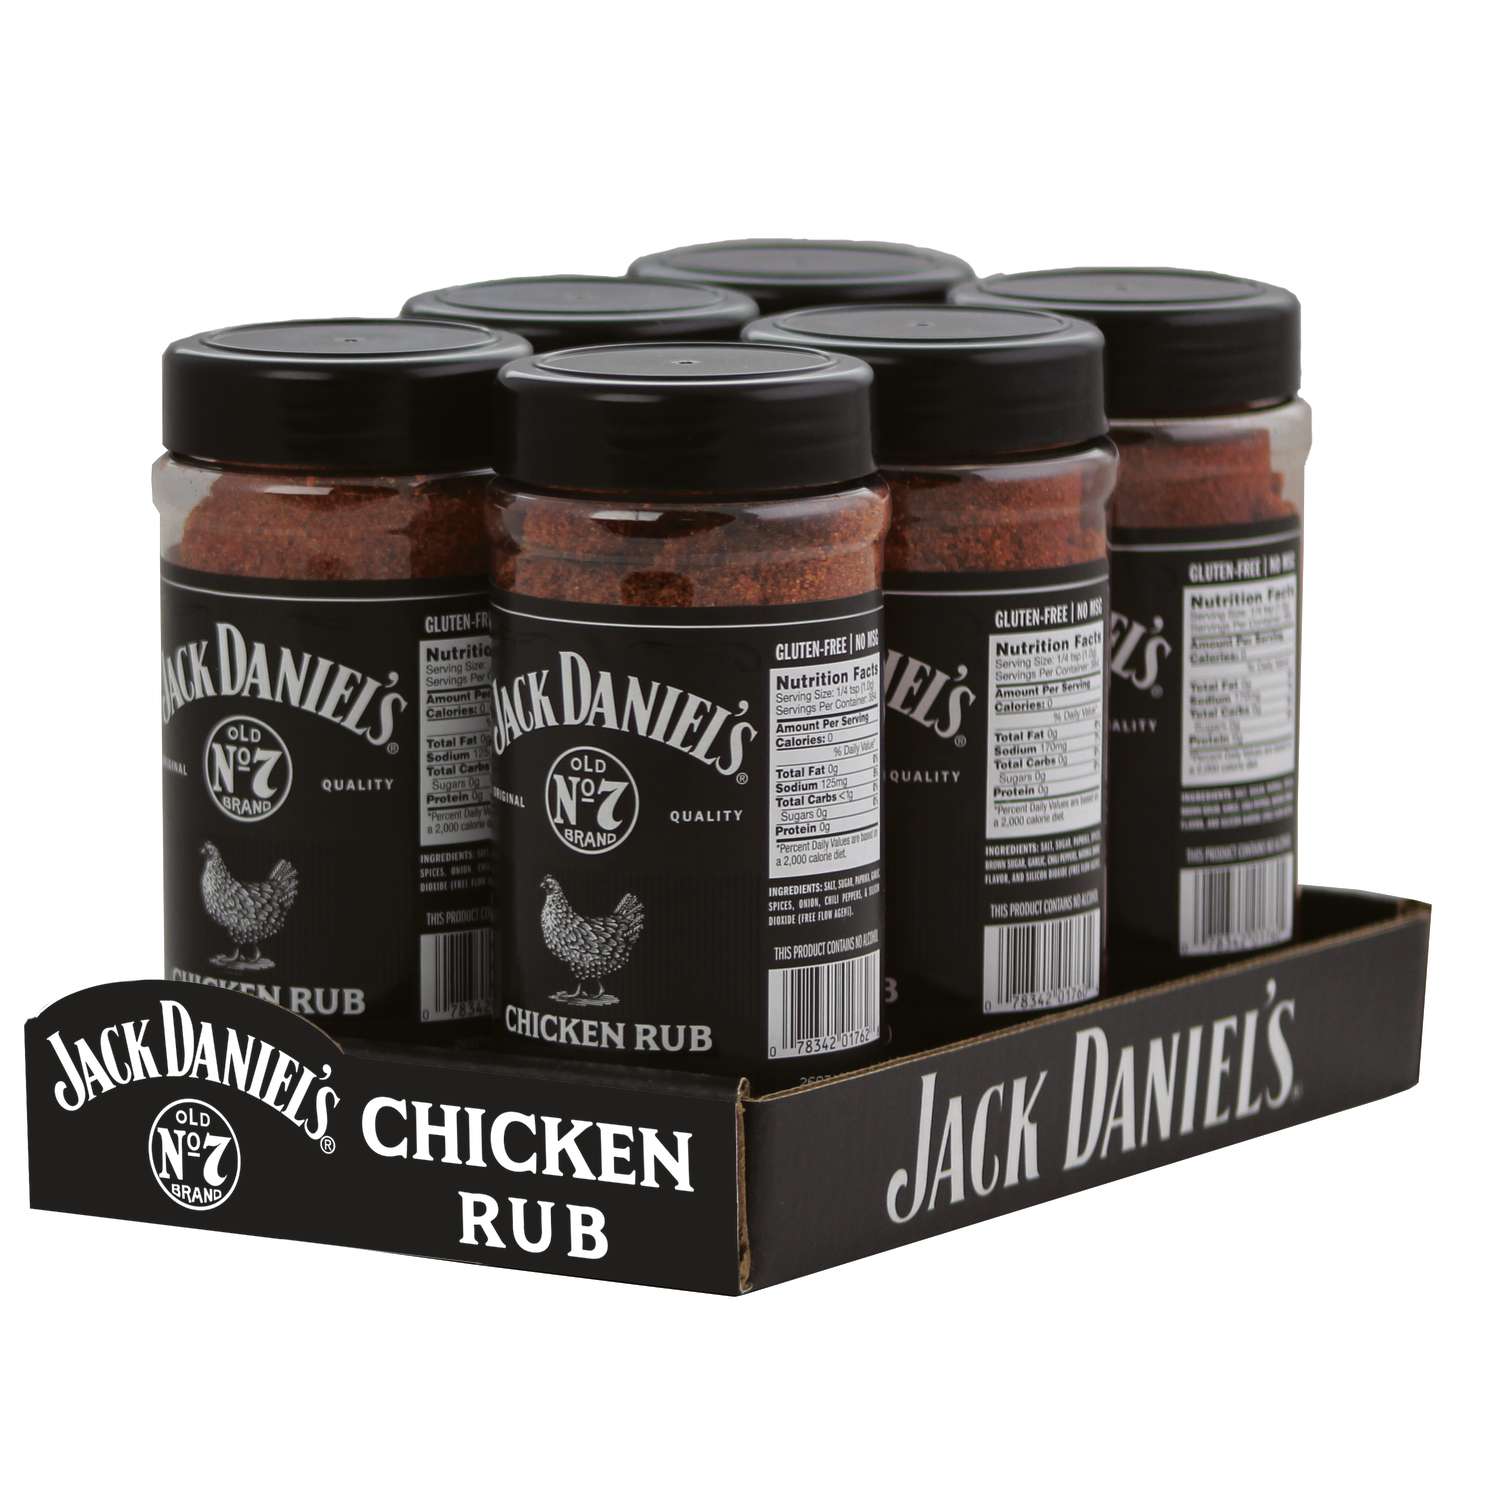 Jack Daniels Original Quality Chicken Rub 11.5oz